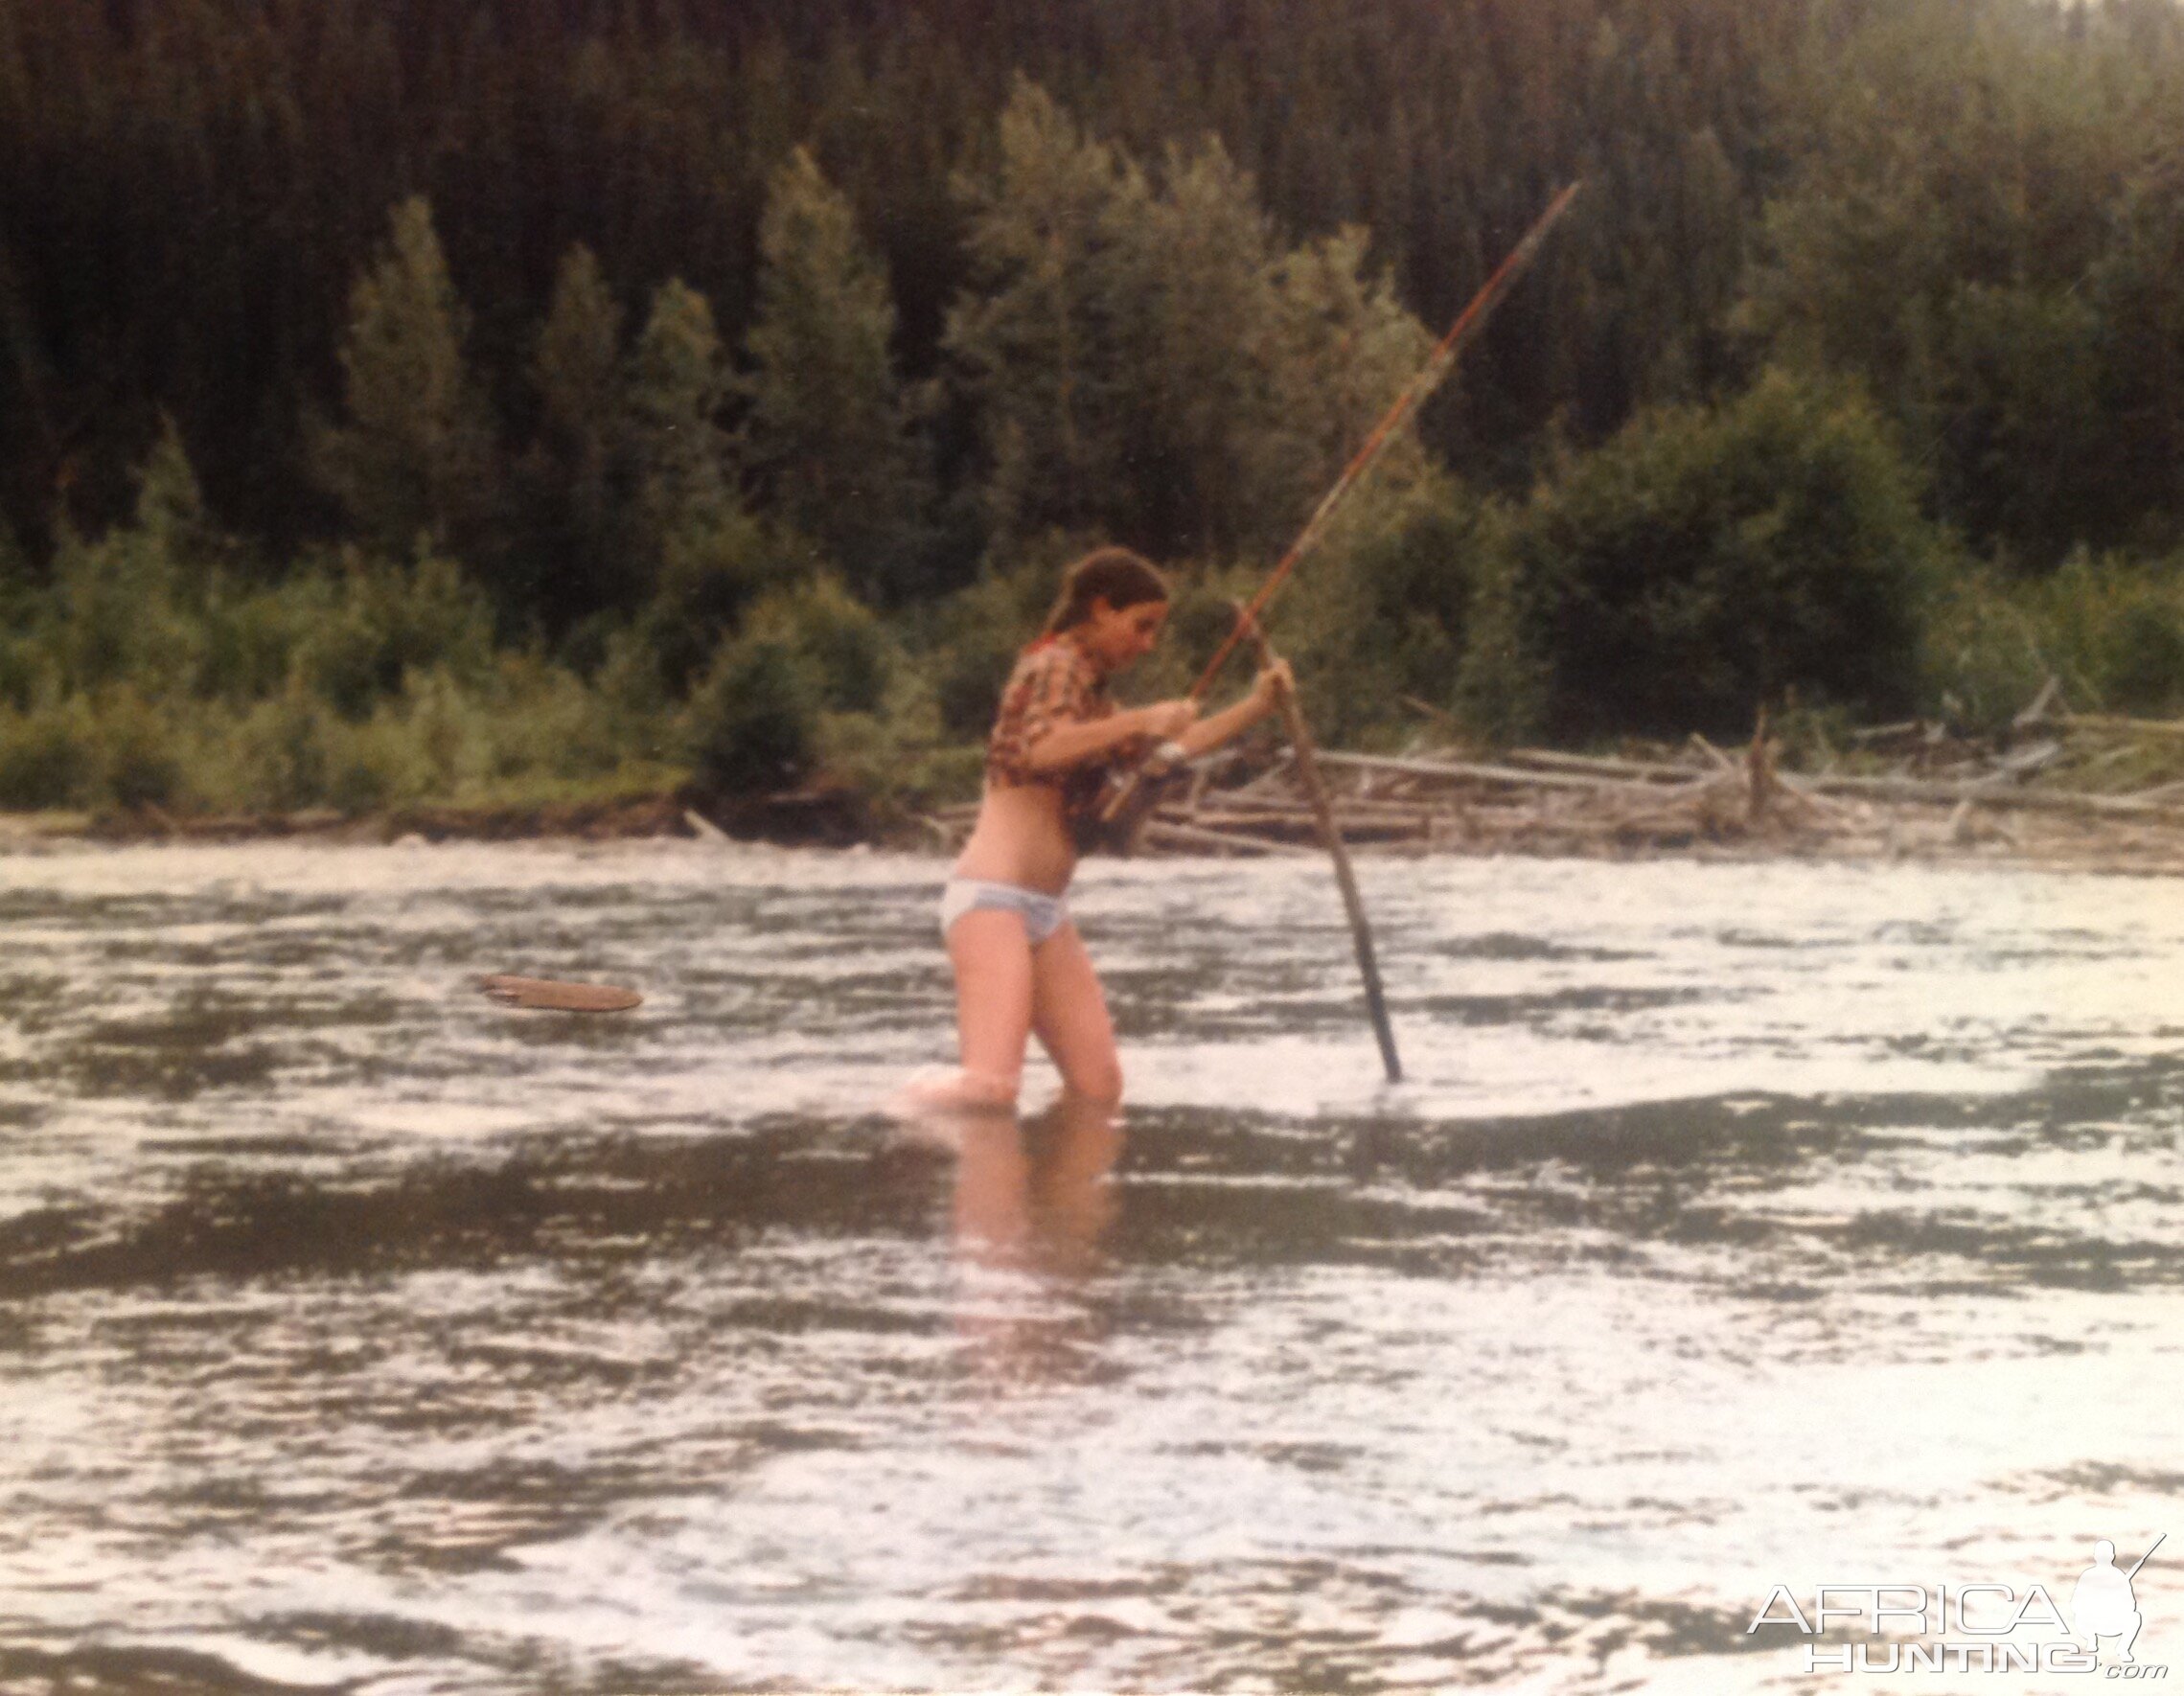 Wilderness river crossing 1980